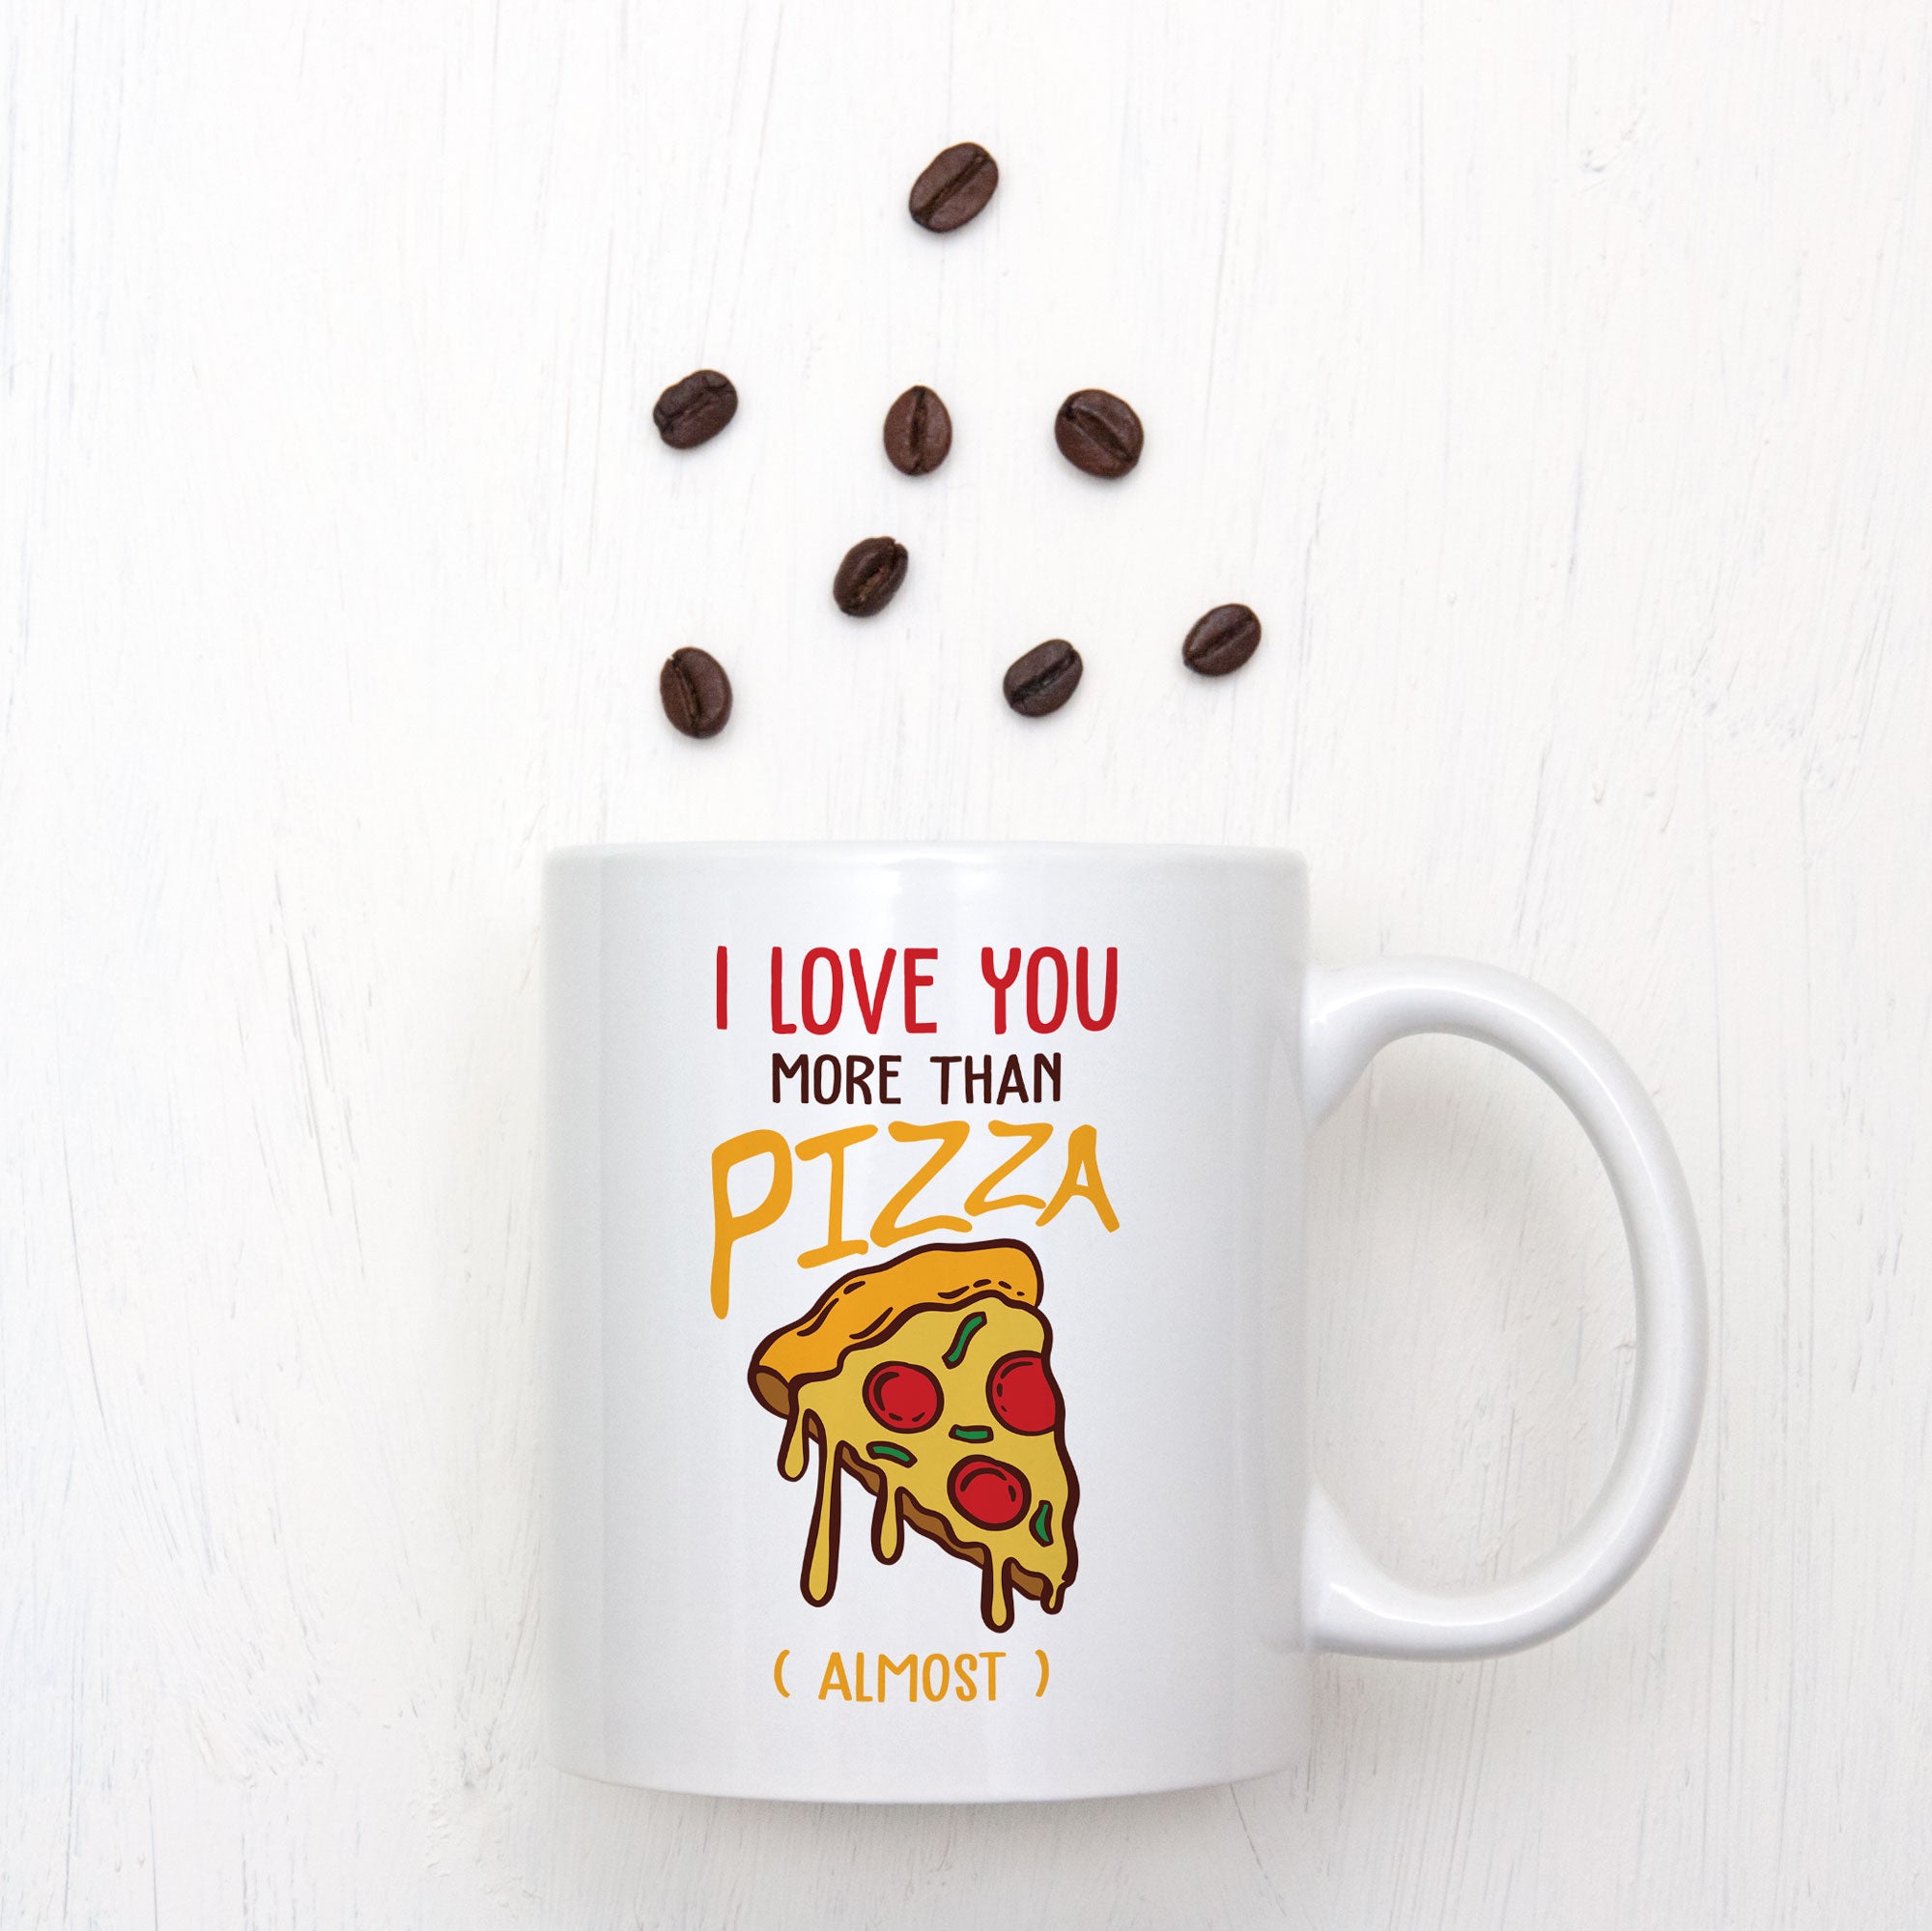 I Love You More Than Pizza (almost) Mug